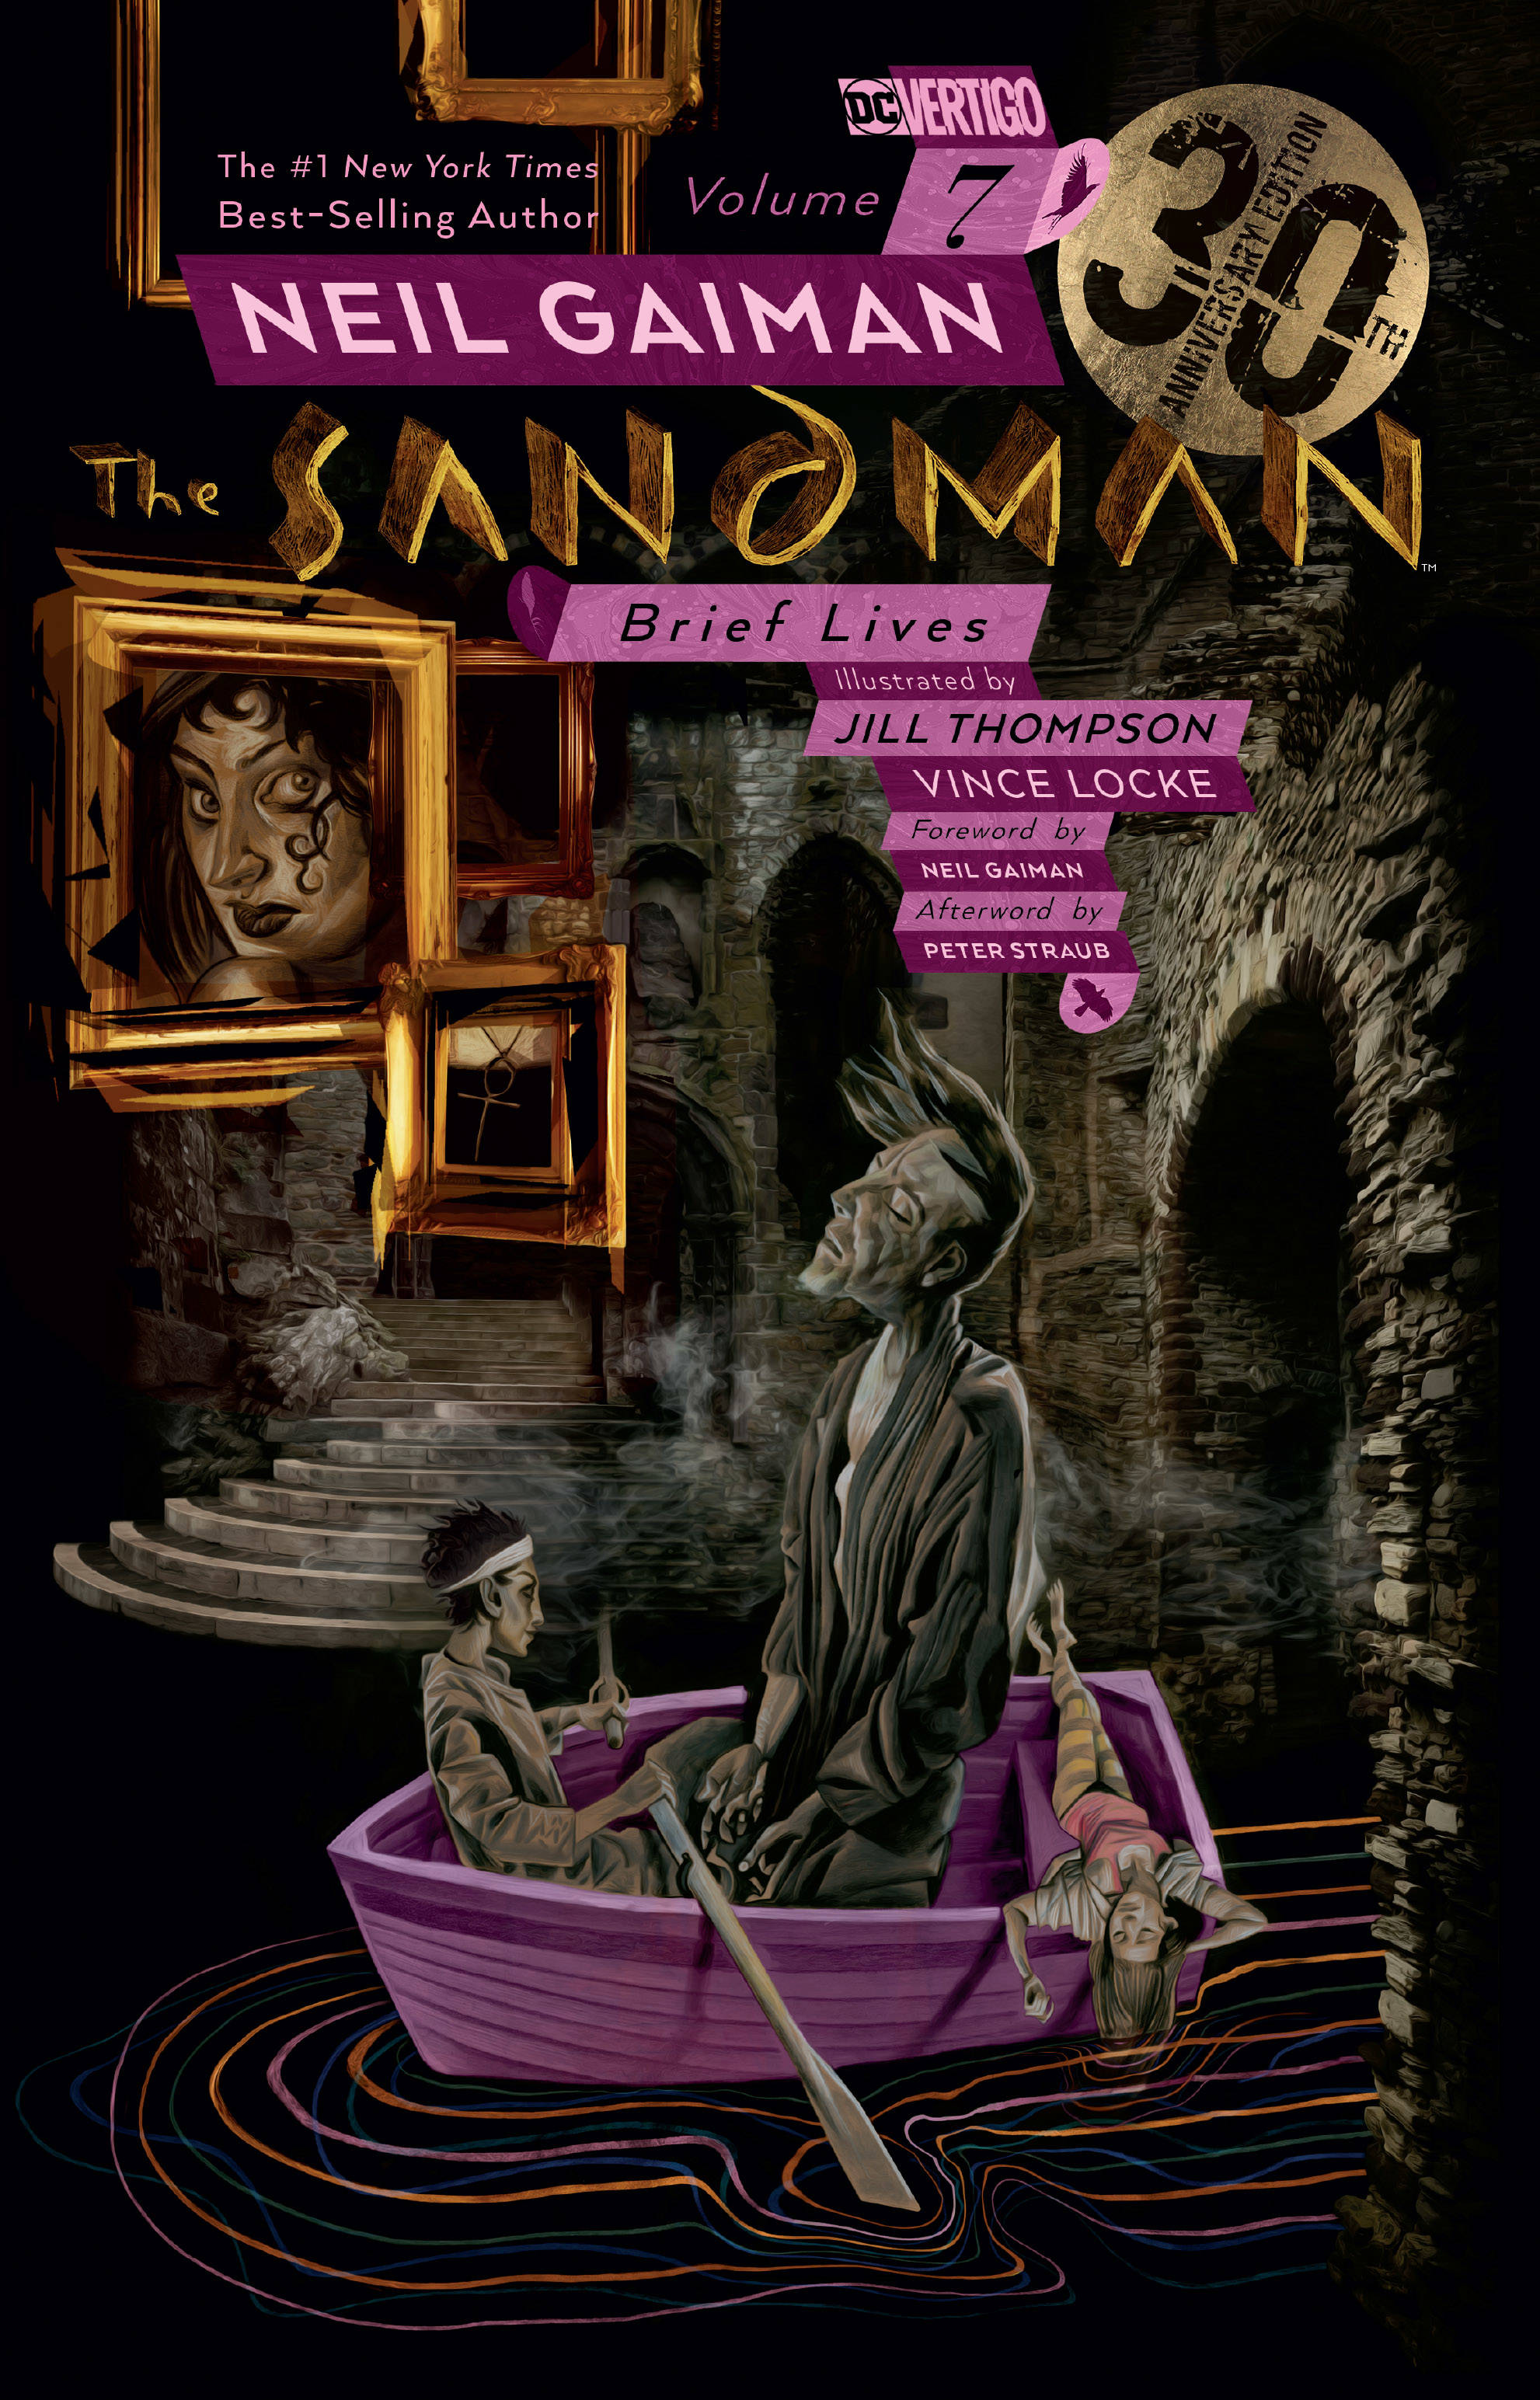 Sandman vol 7: Brief Lives (30th Anniversary Ed'n)